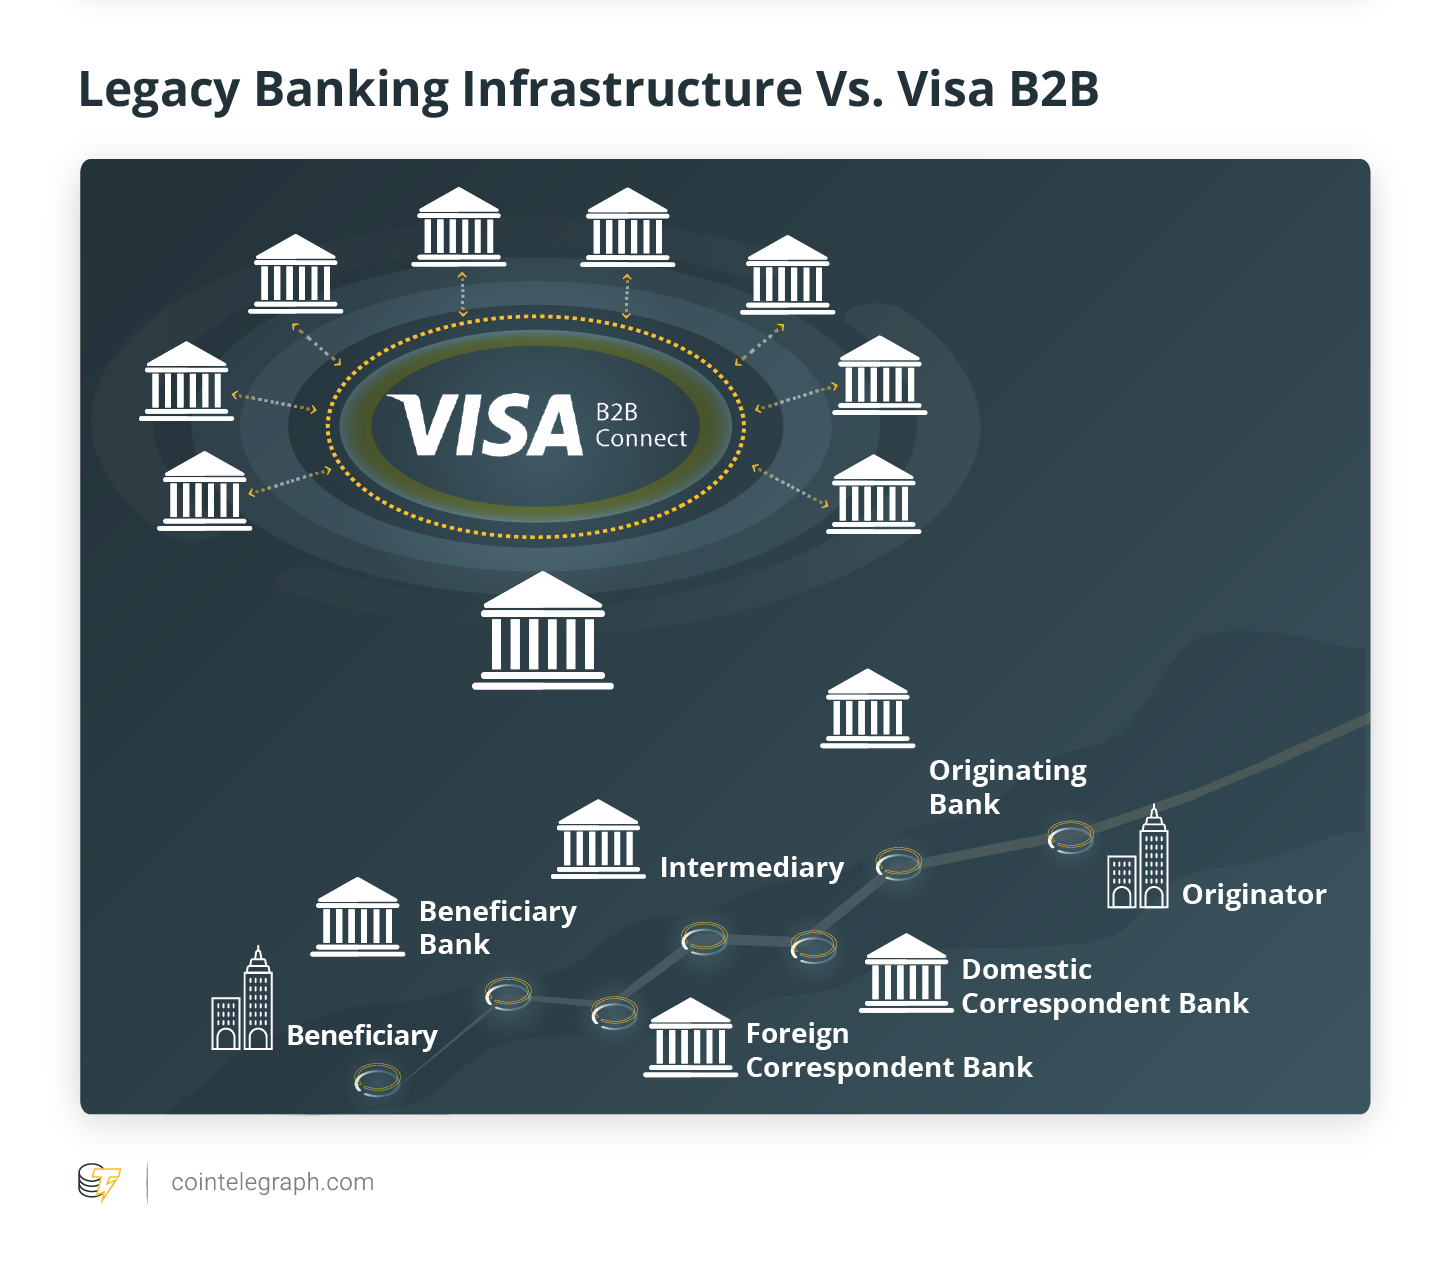 Infrastruttura bancaria legacy vs. Visto B2B